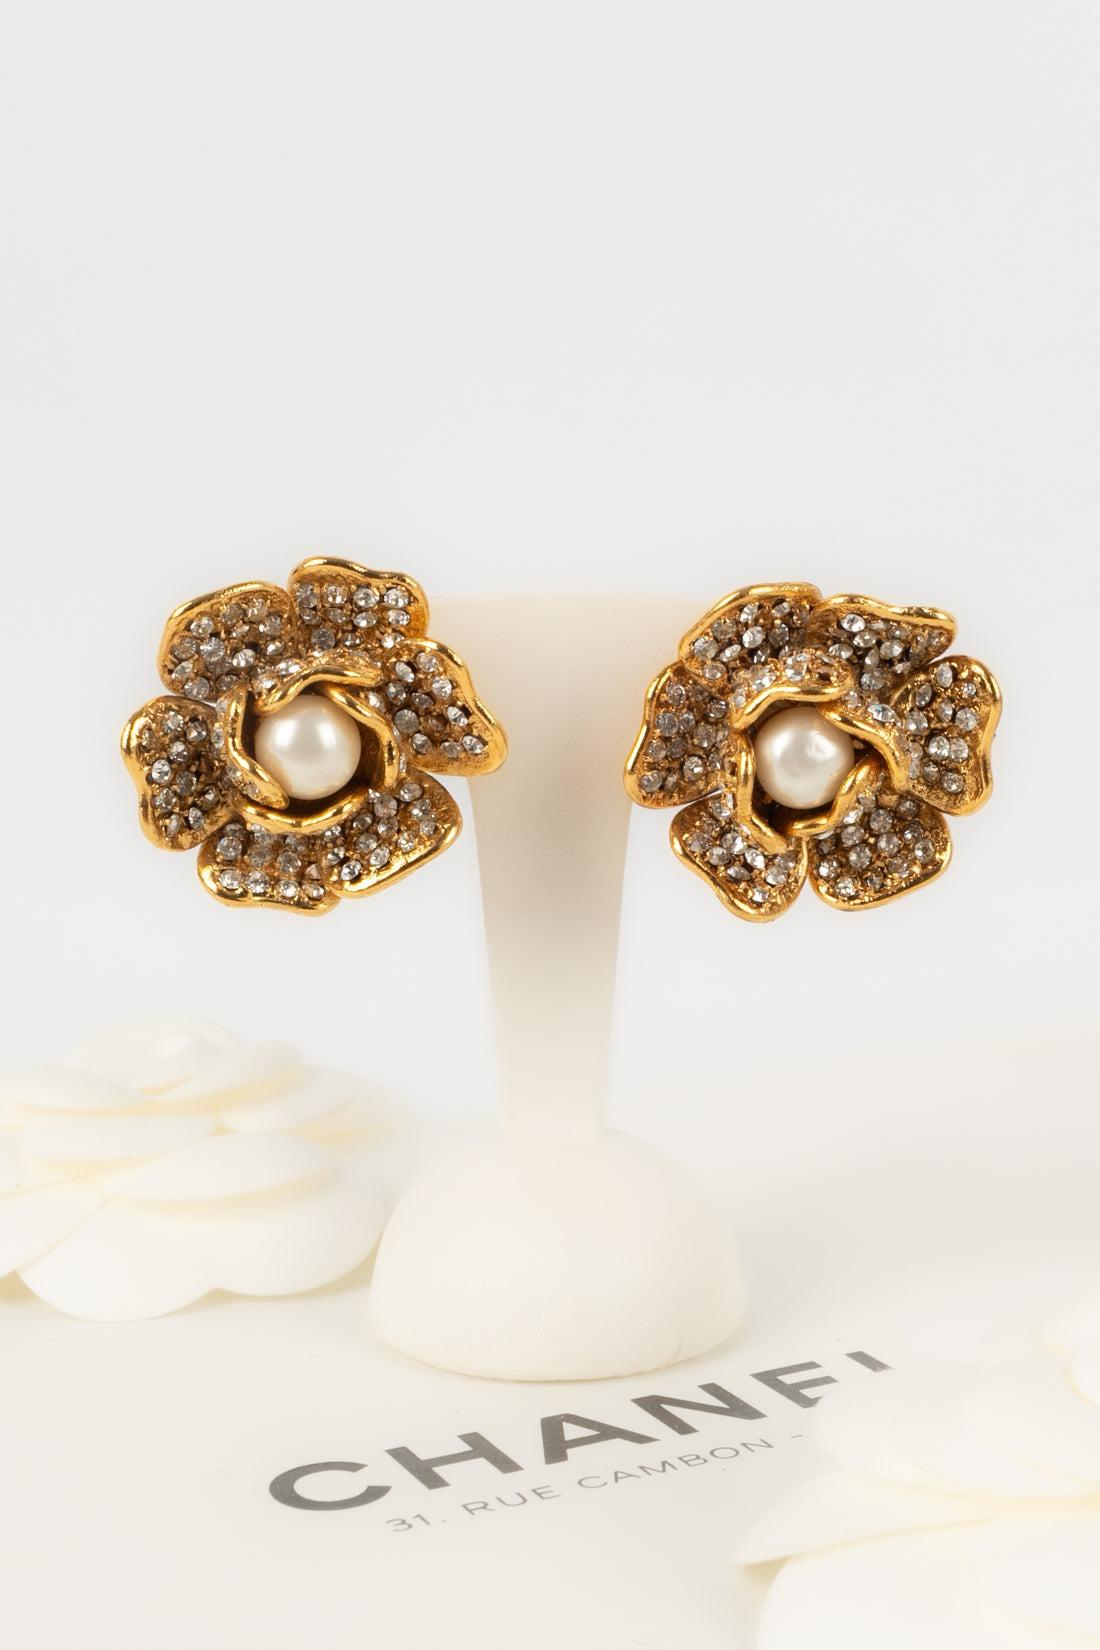 Chanel Golden Metal Camellia Earrings, 1997 For Sale 2